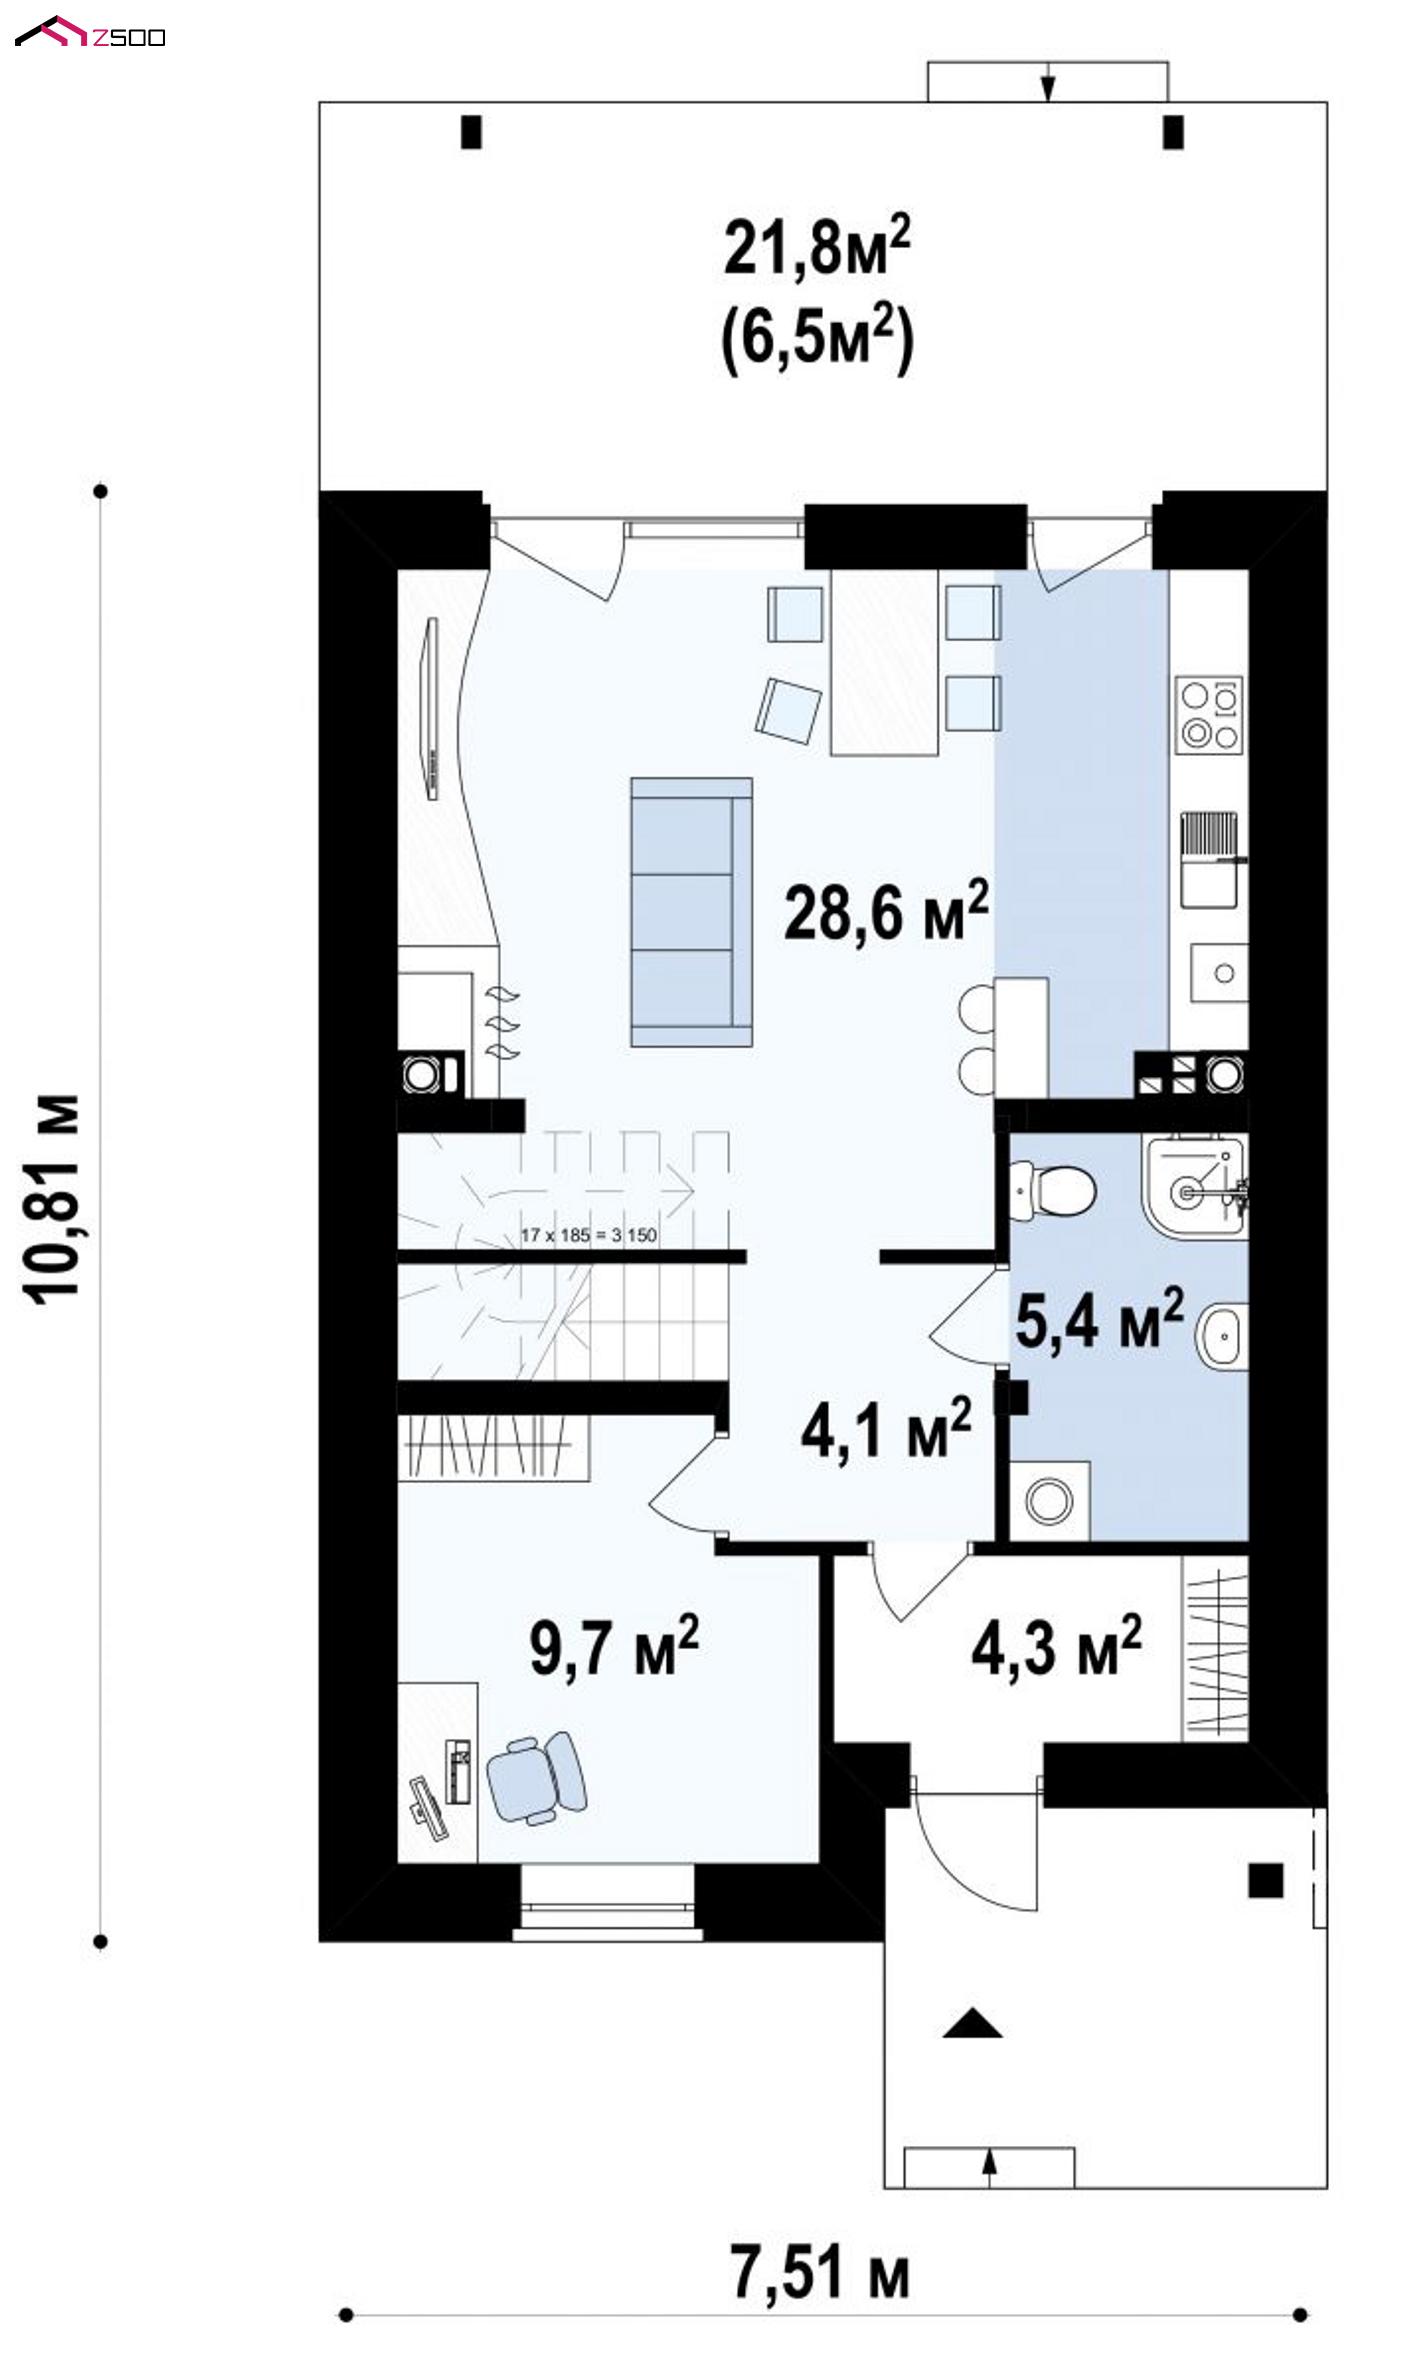 1-ый этаж - план проекта Z38